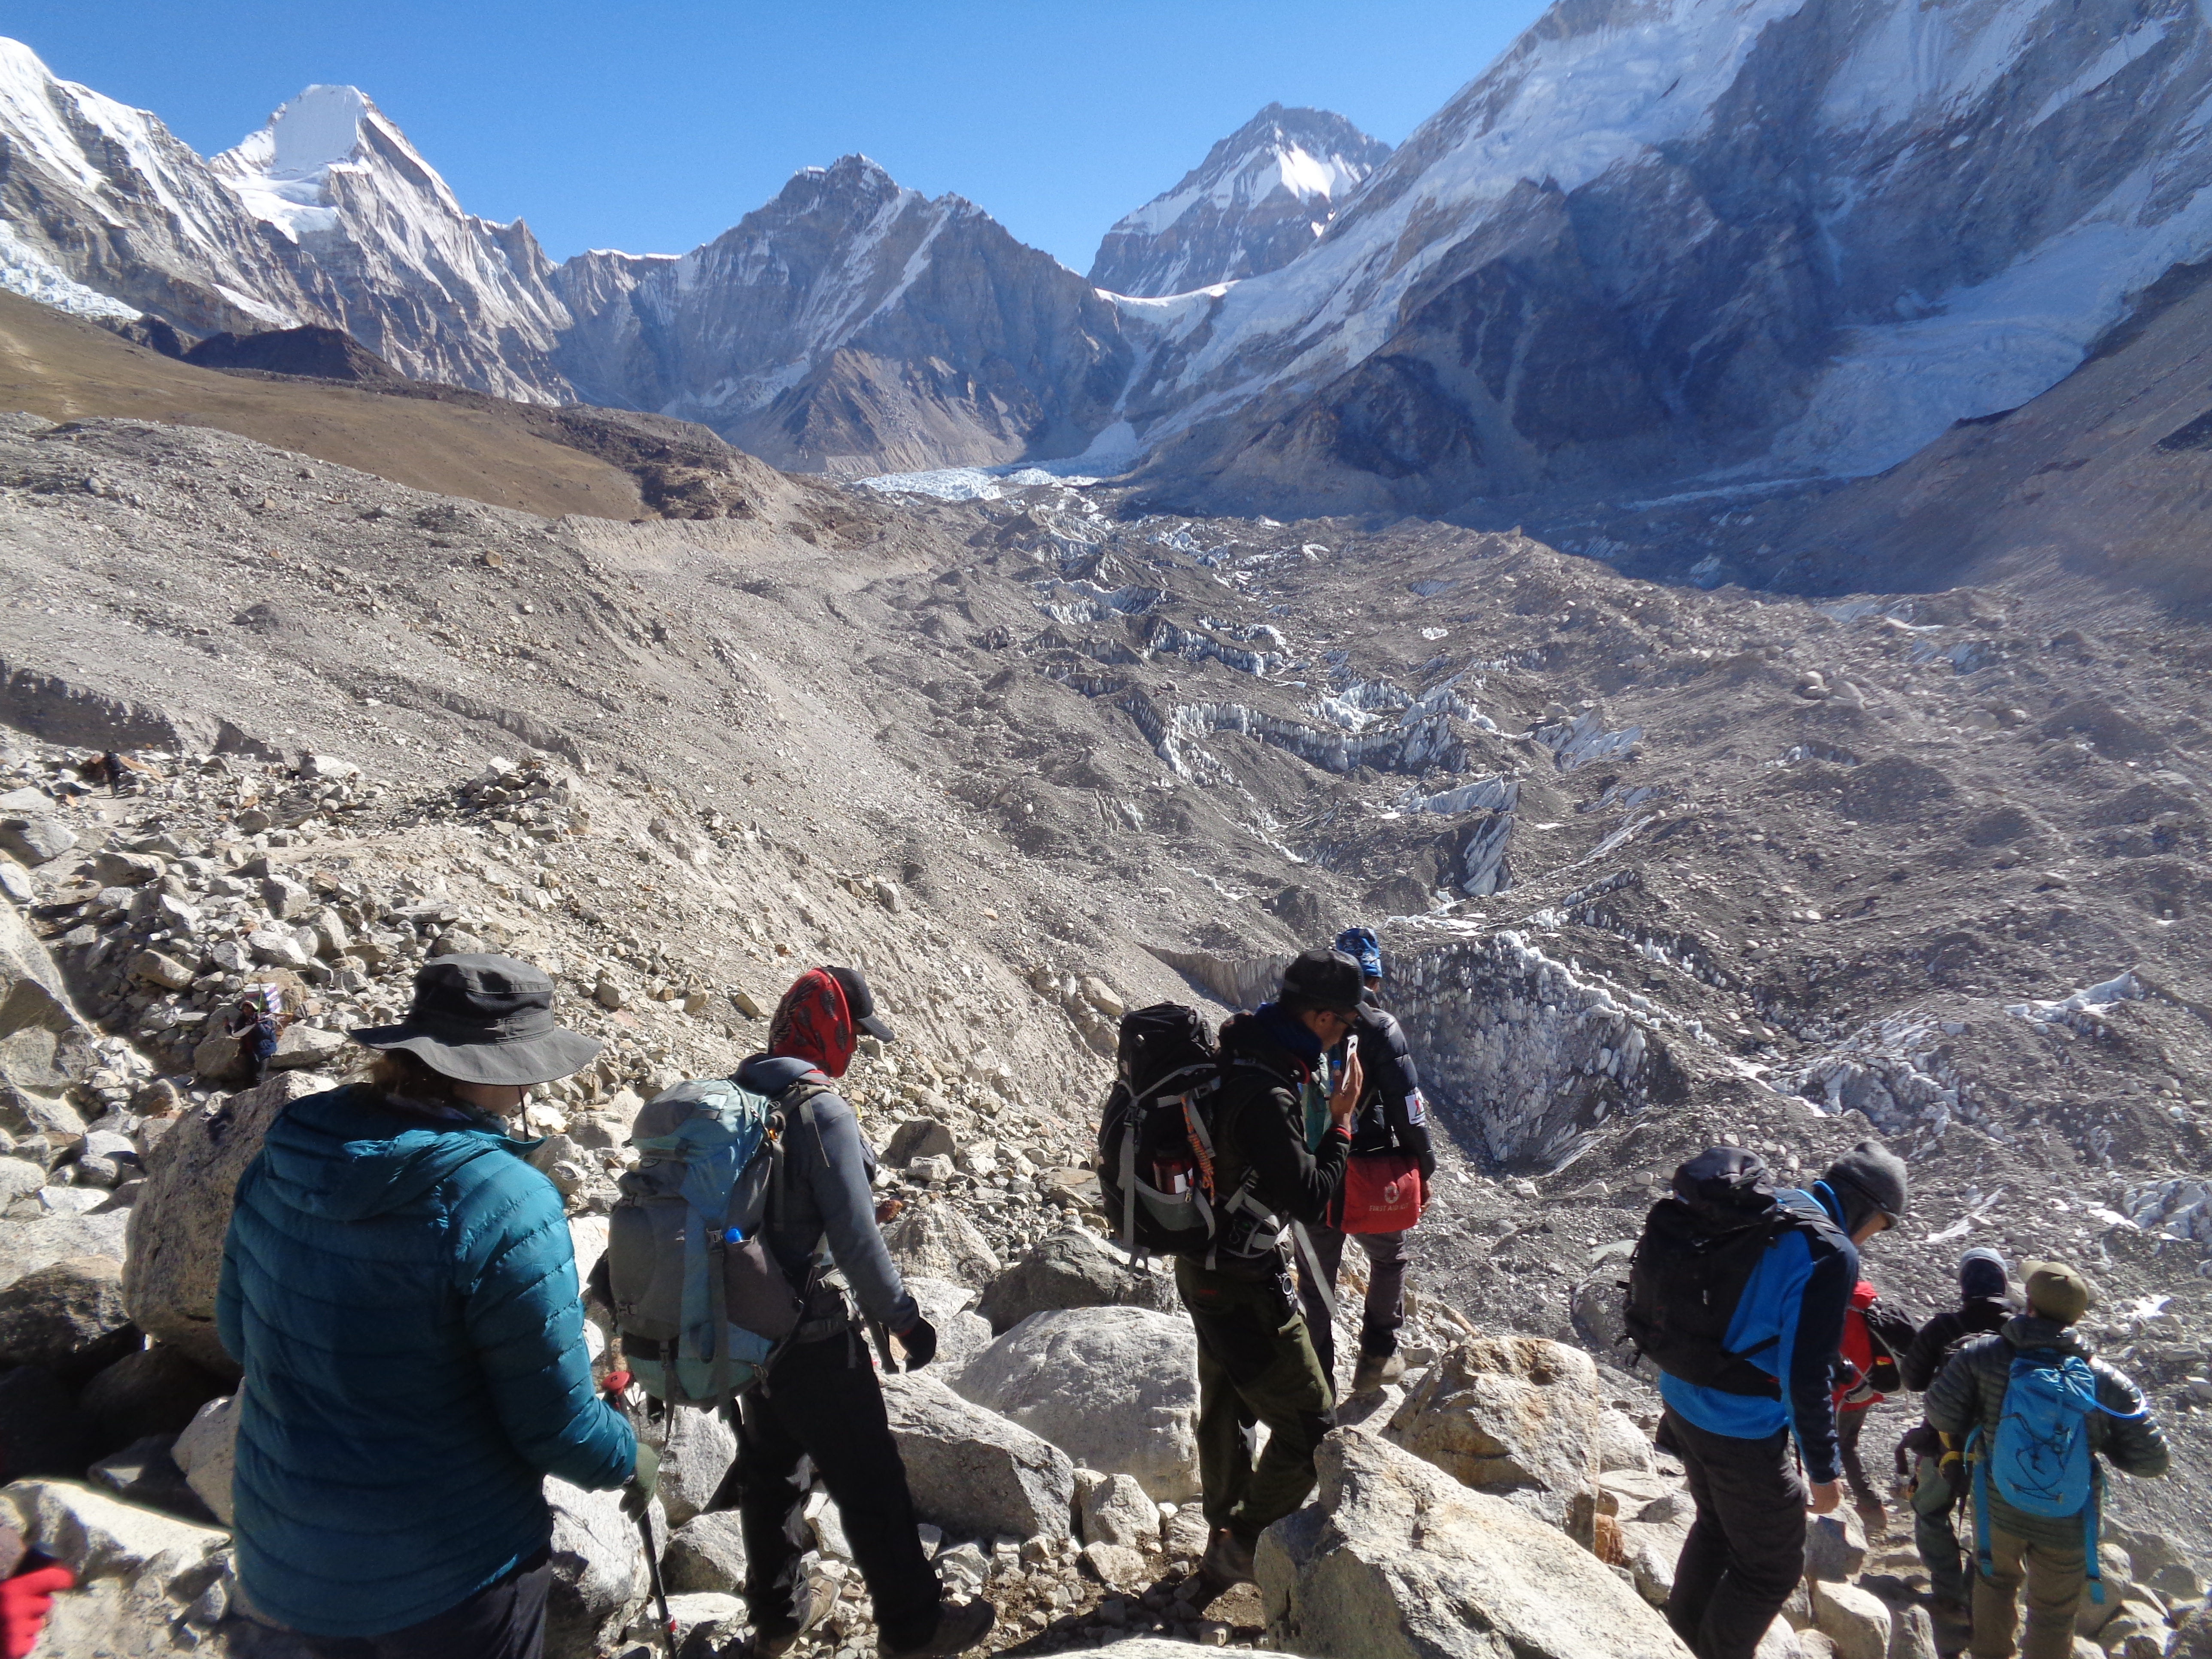 The Khumbu Glacier near Gorak Shep